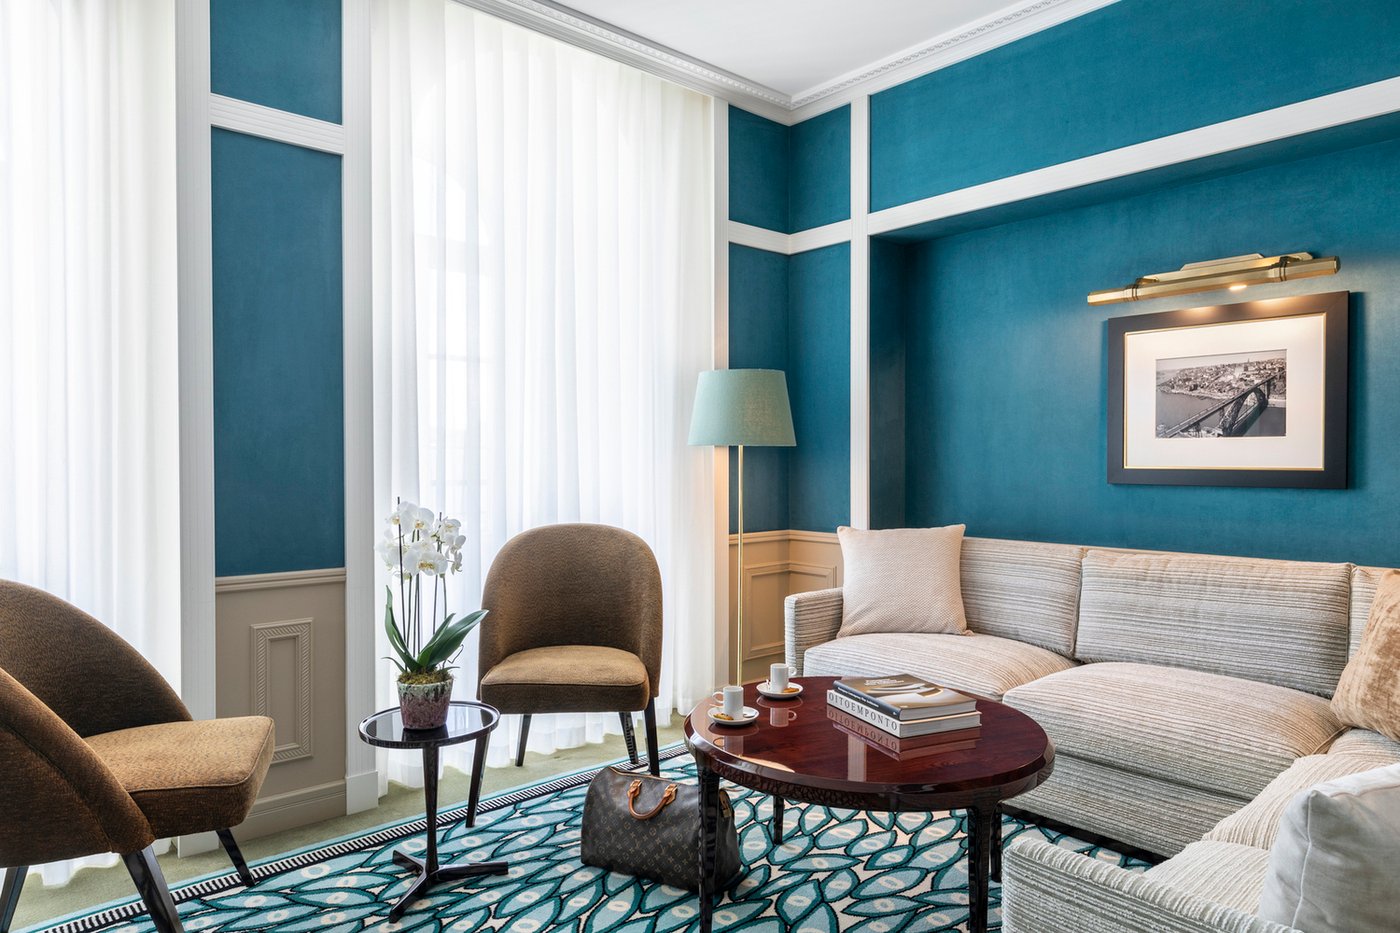 Luxury boutique hotel Porto Portugal Maison Albar Le Monumental Palace 5 stars room suite